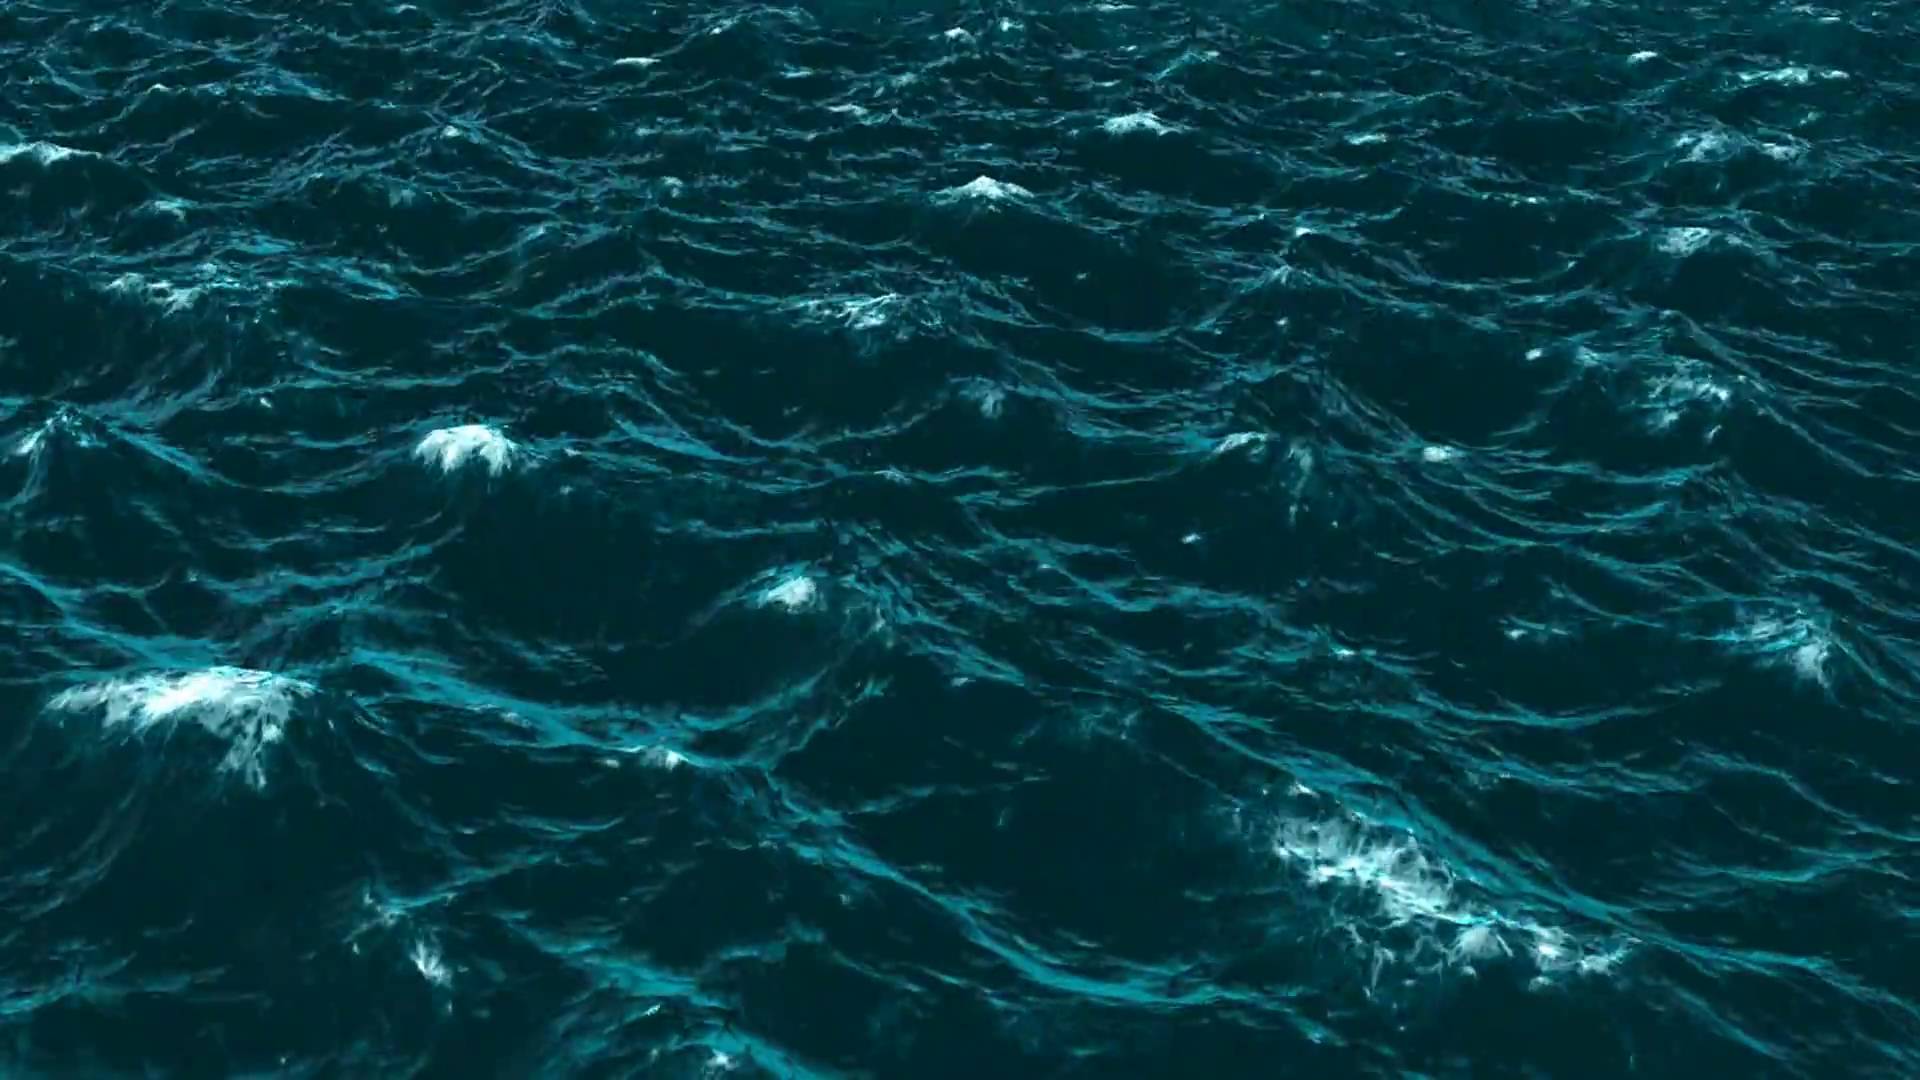 Ocean Waves HD 1080p (Fantastic) - YouTube